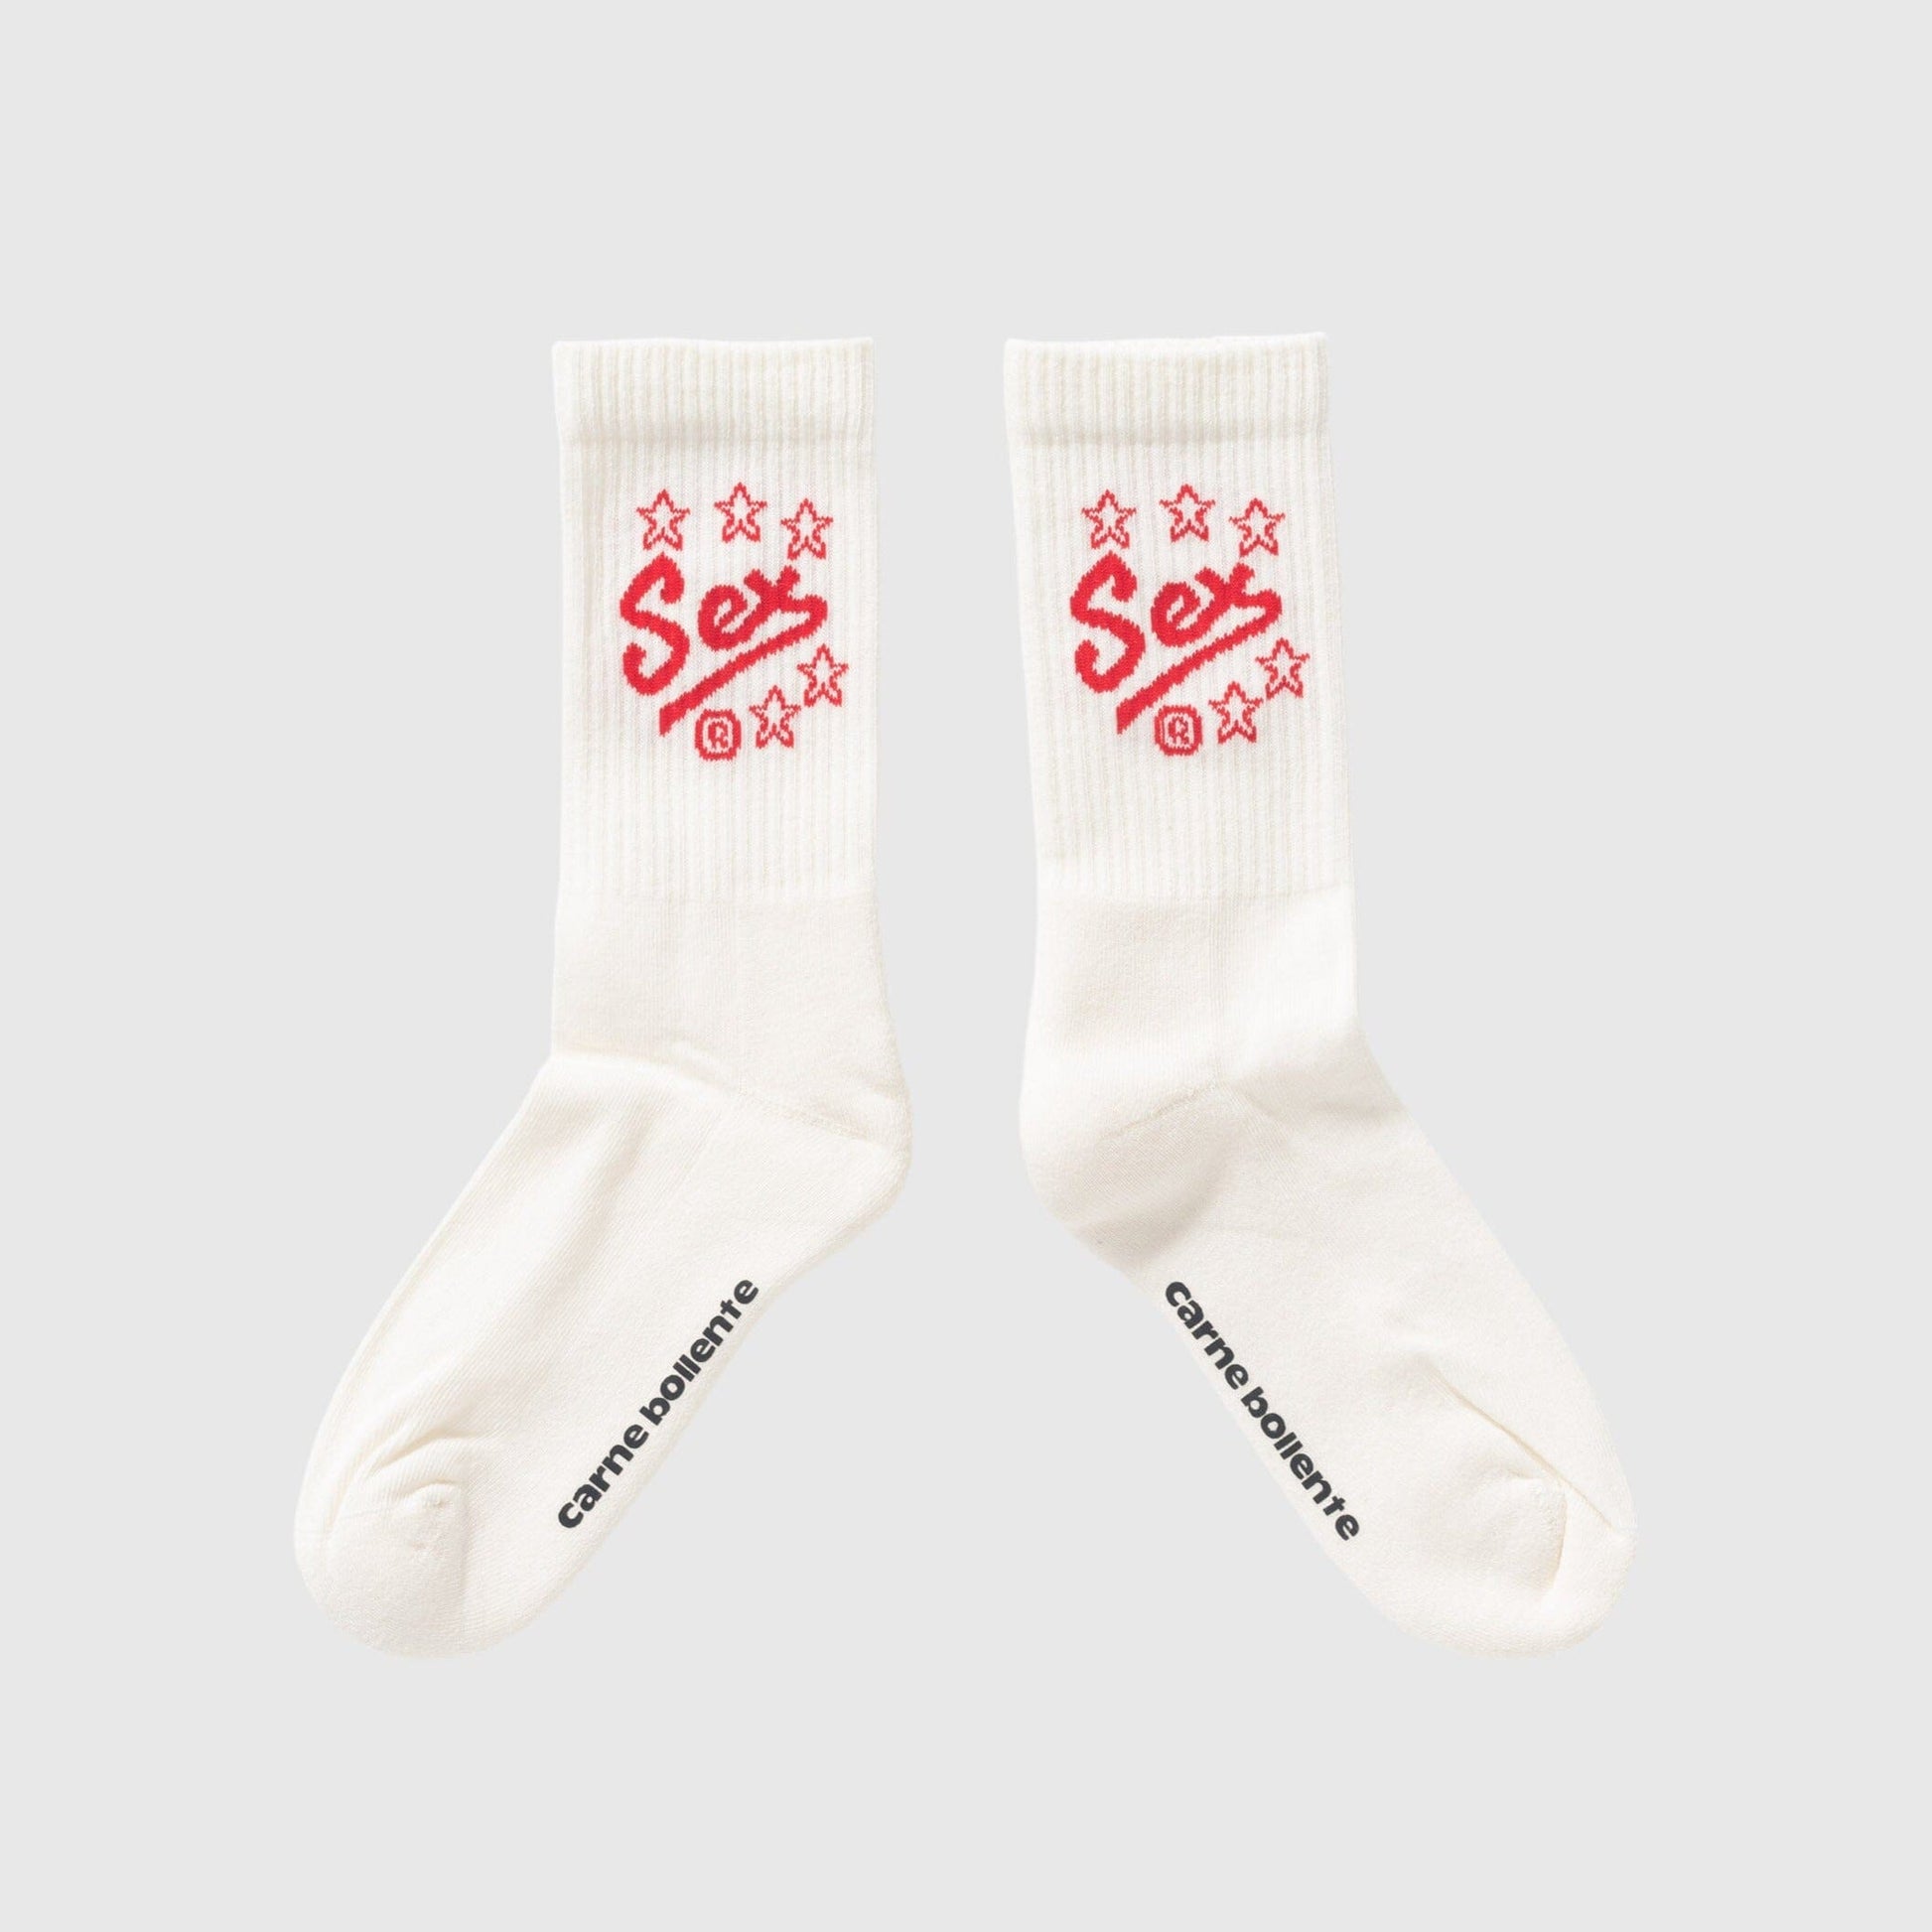 Carne Bollente Shocks Socks - White Socks Carne Bollente 